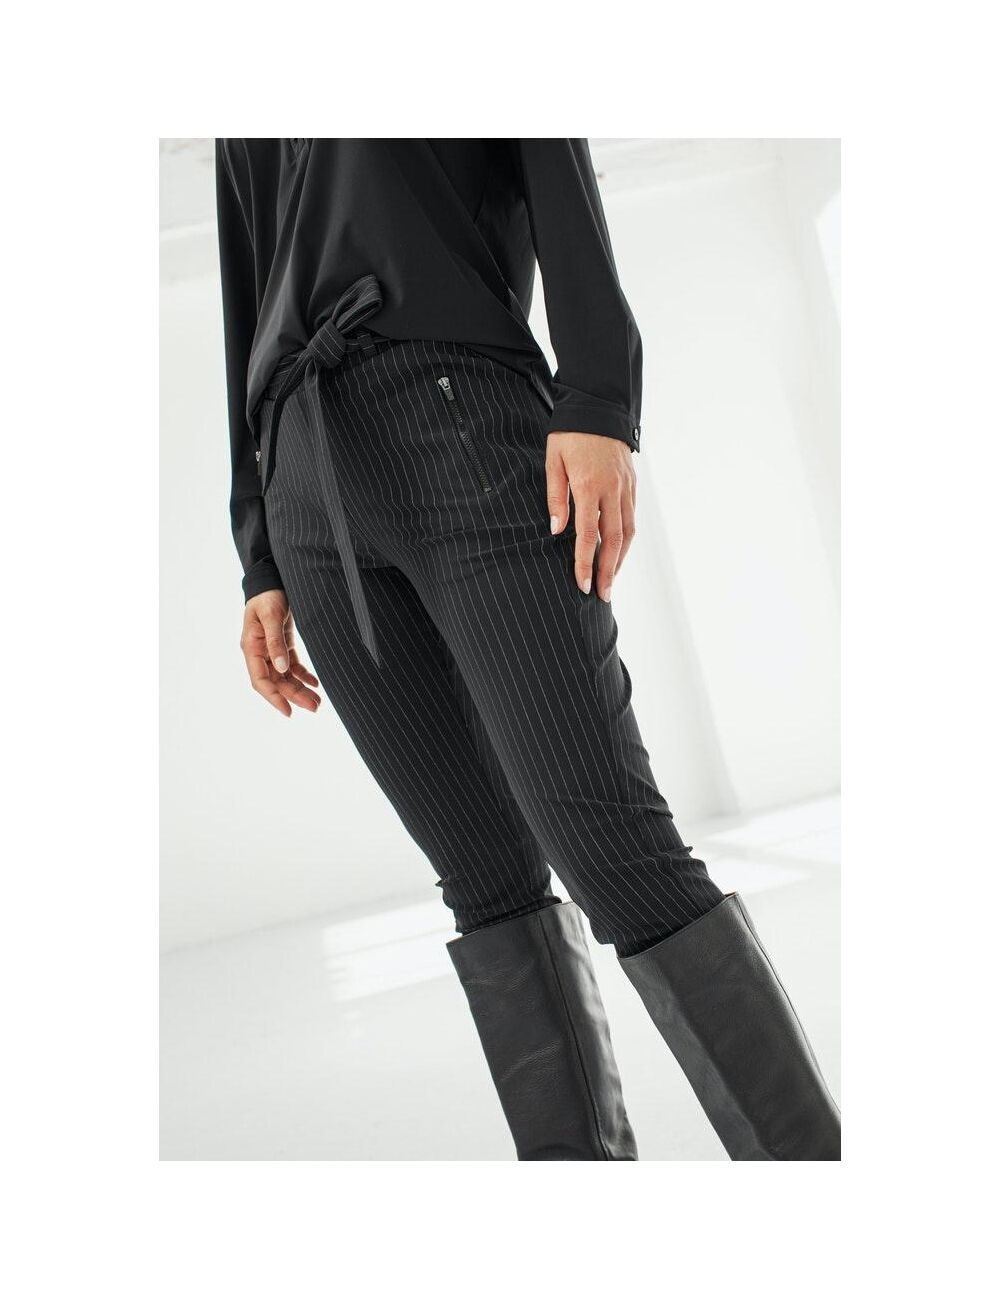 emotioneel Spanning verraden Studio Anneloes margot pinstripe trousers 94745 Broek 9011 black/off white  | Expresswear.nl